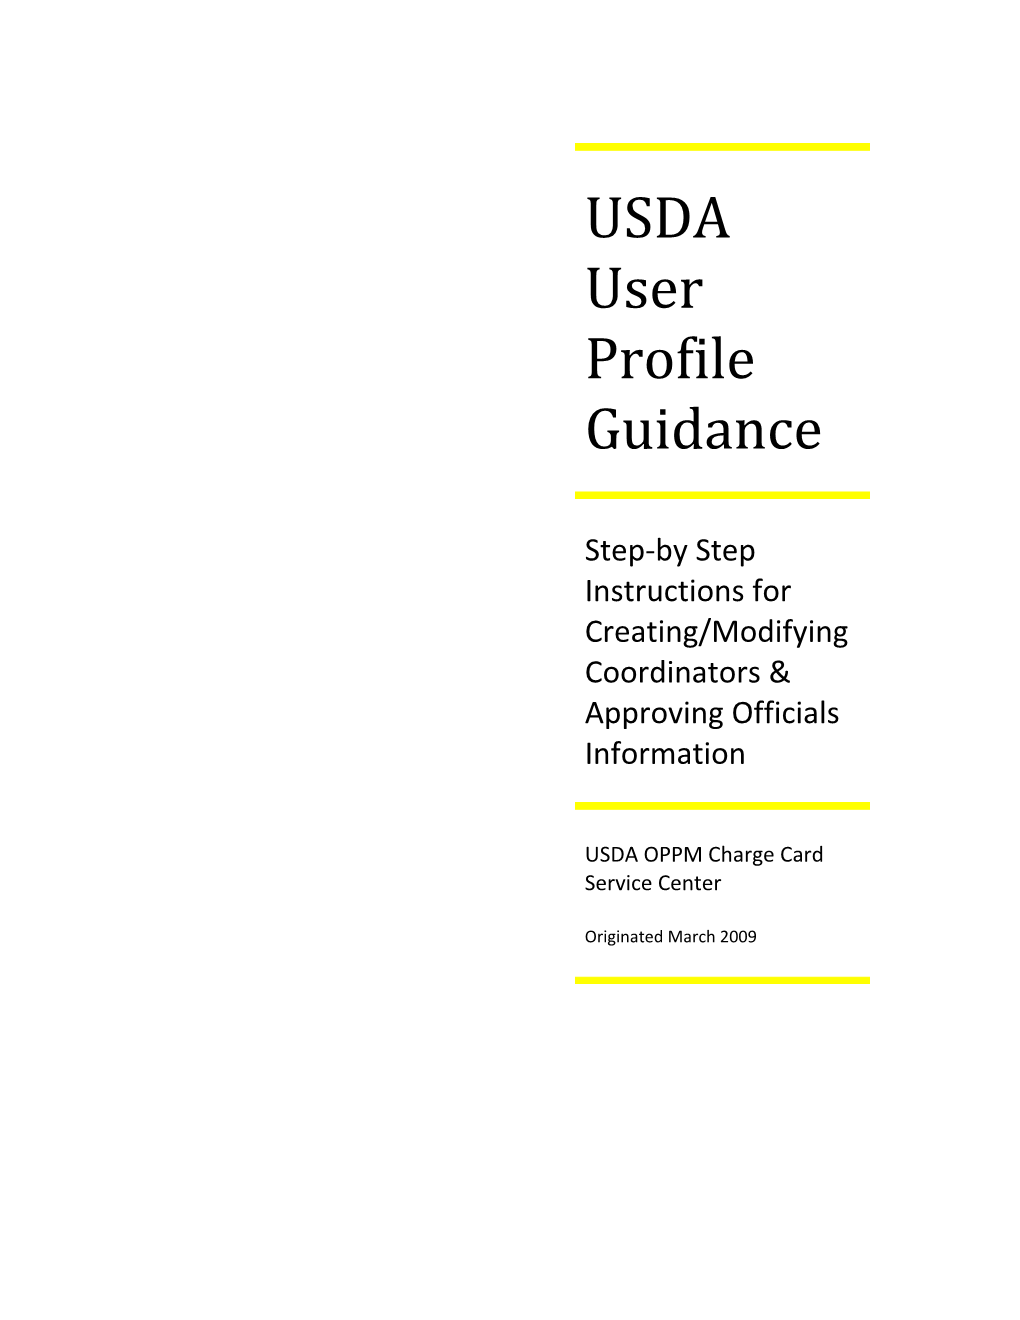 USDA User Profile Guidance